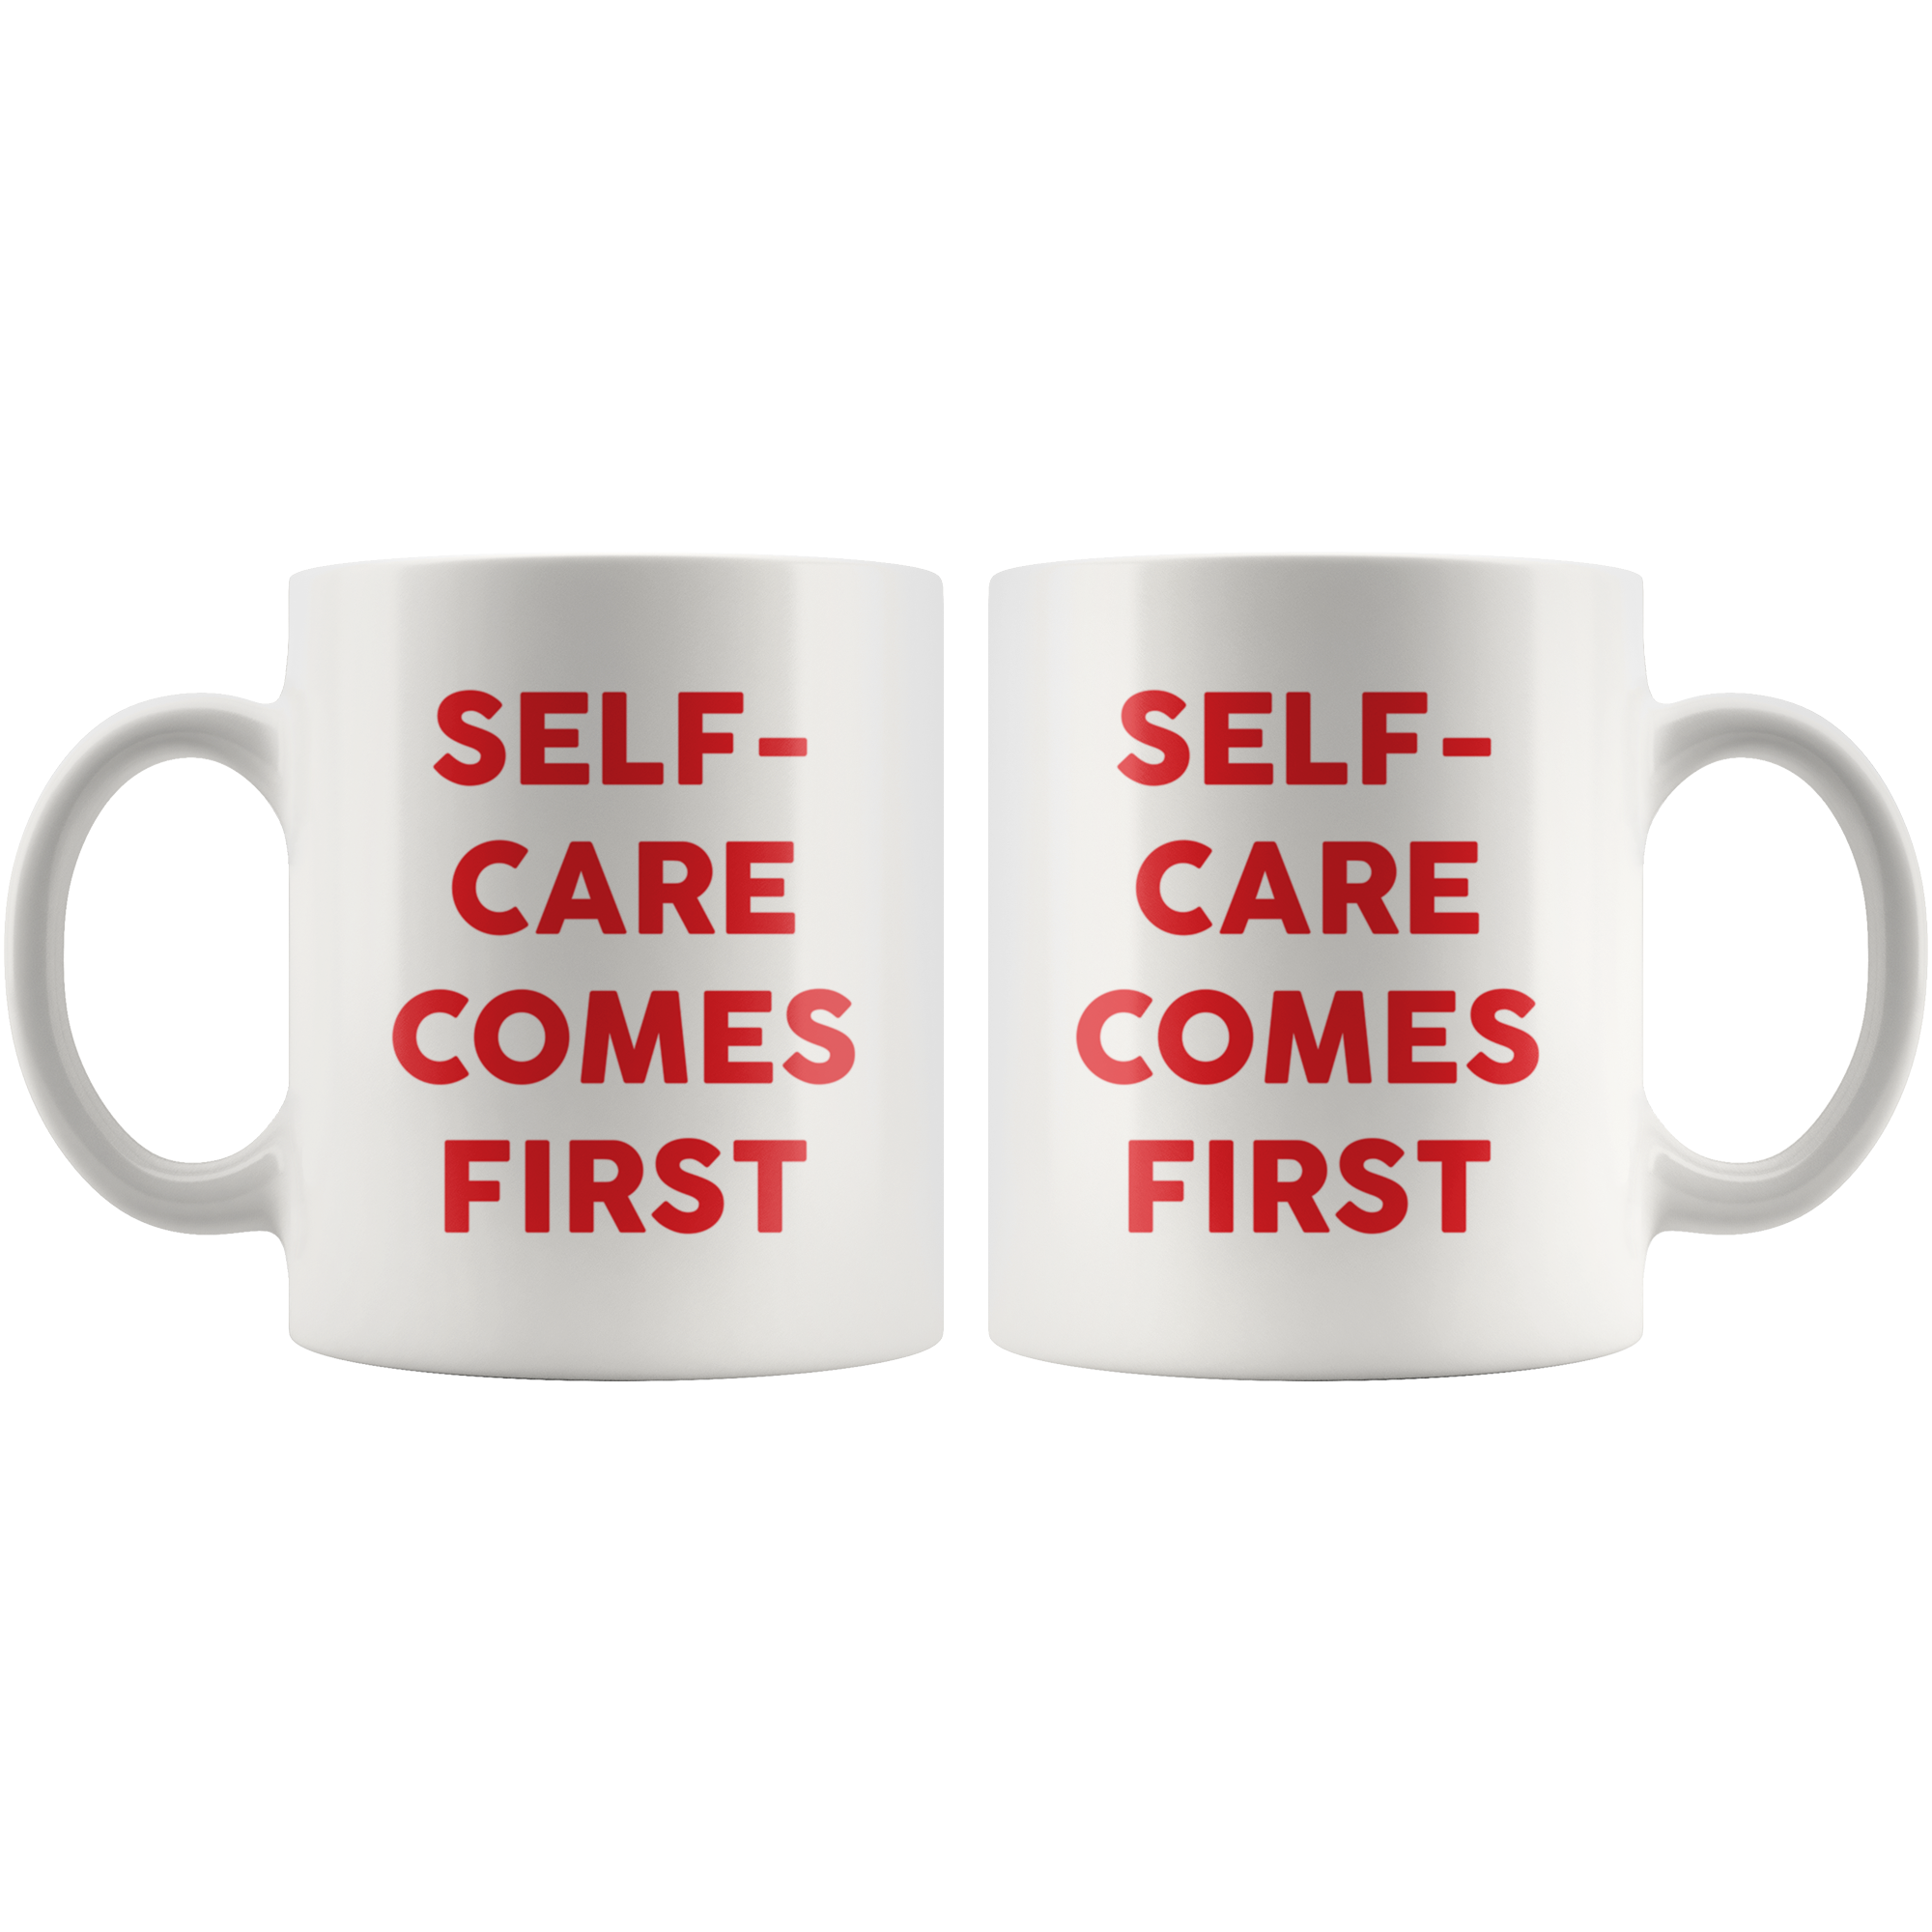 Self-Care Comes First Coffee Mug